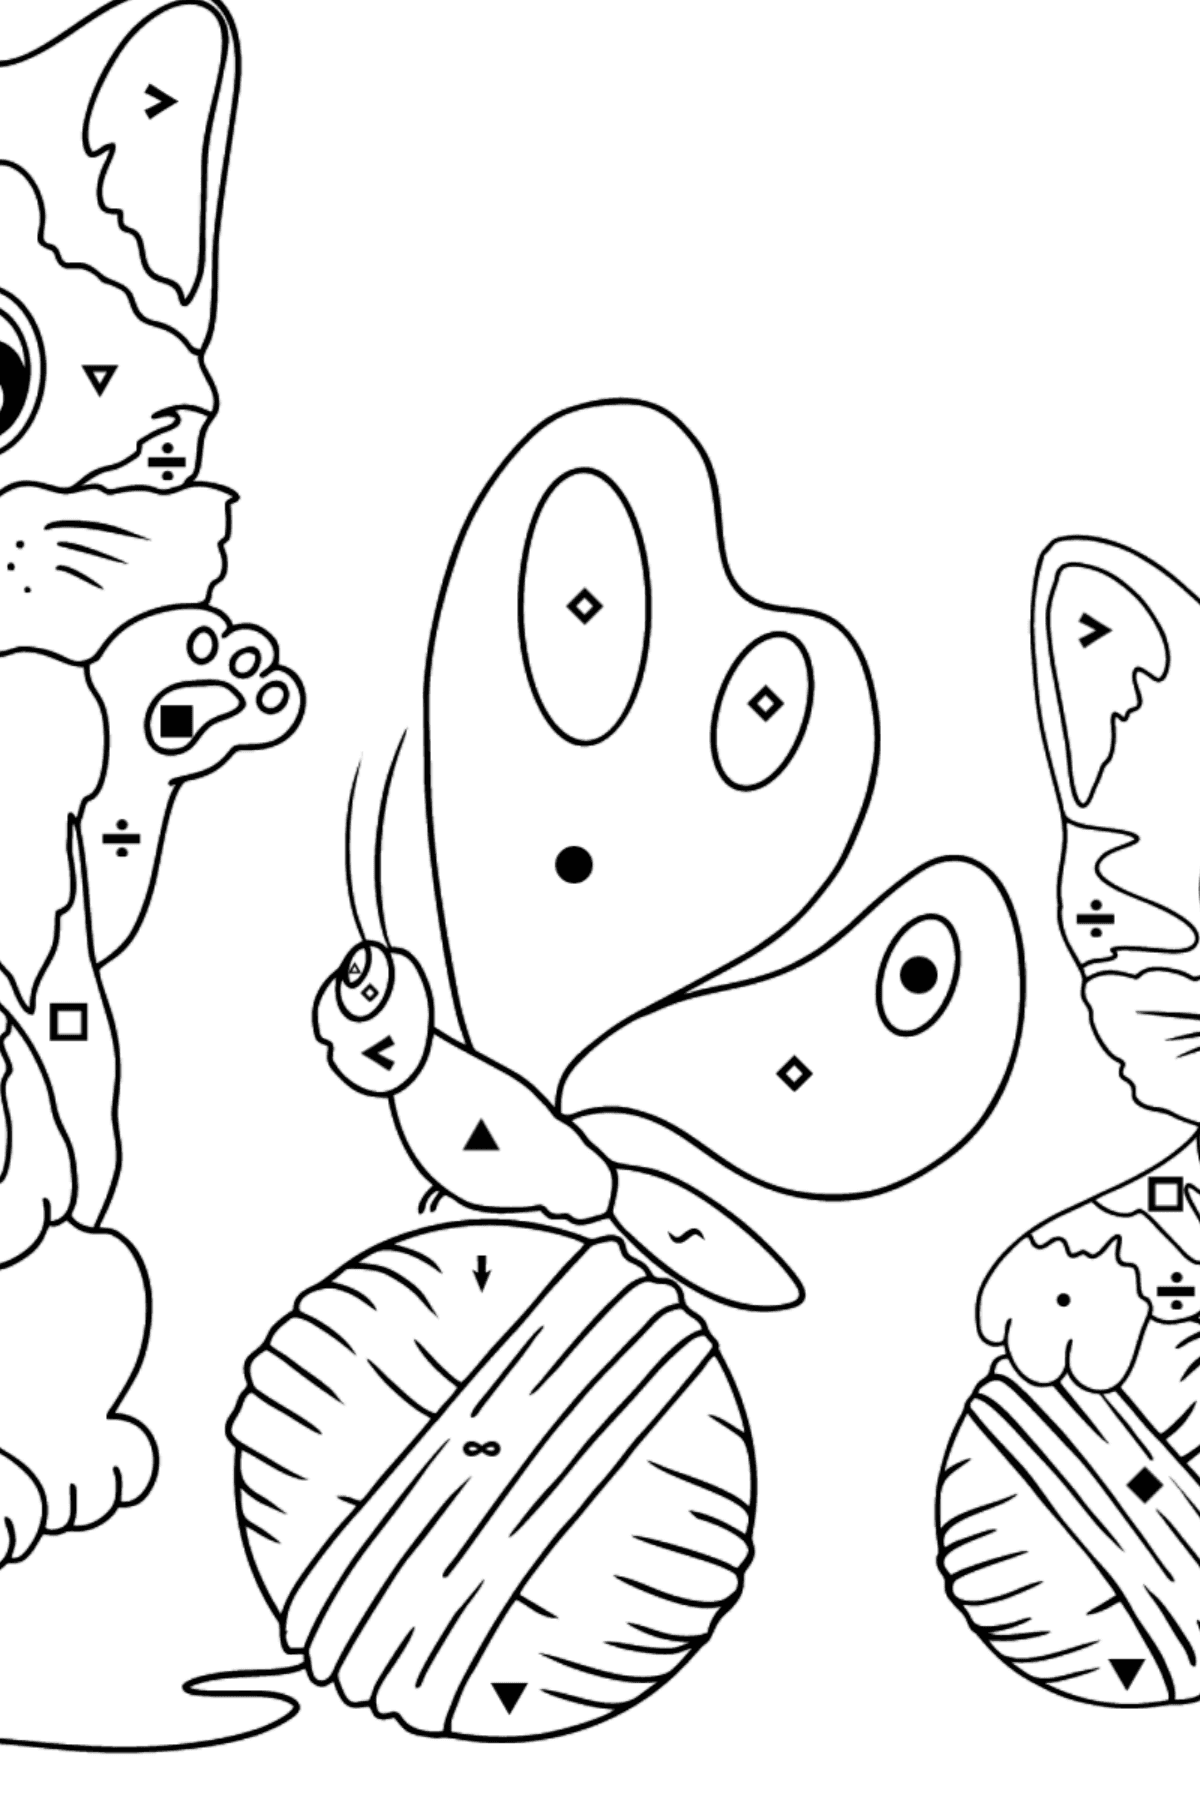 Раскраска котята с клубком ниток - По Символам для Детей